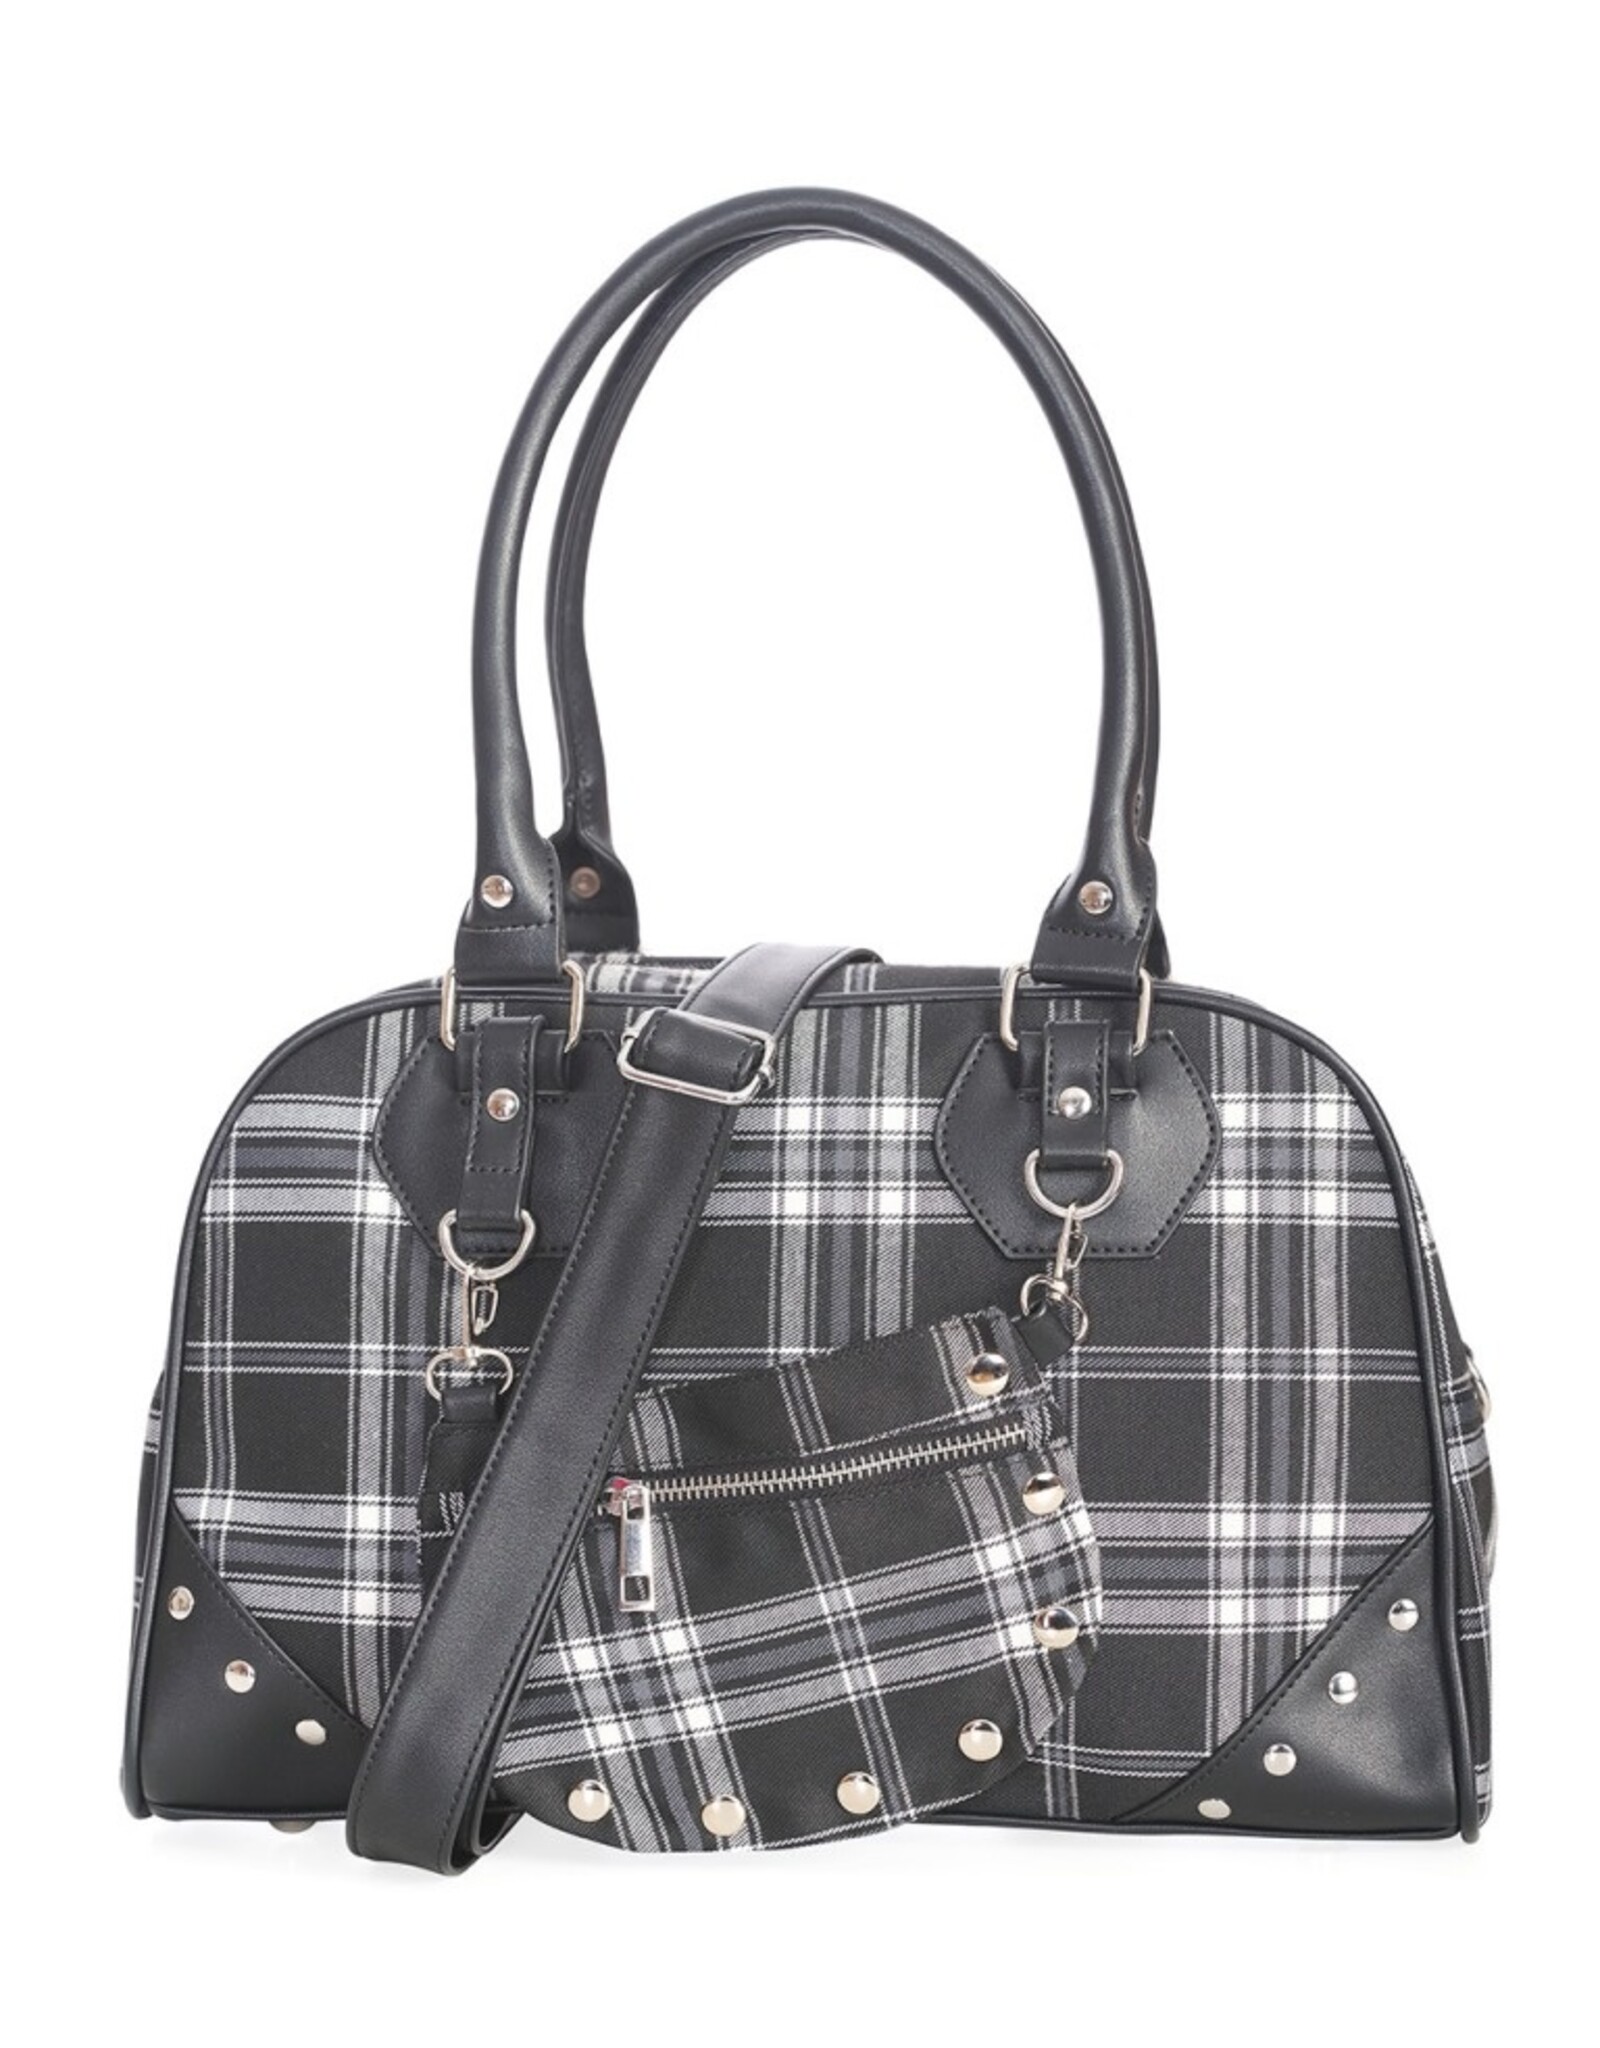 Banned Gothic bags Steampunk bags - Banned Warren Plaid Handbag black-grey